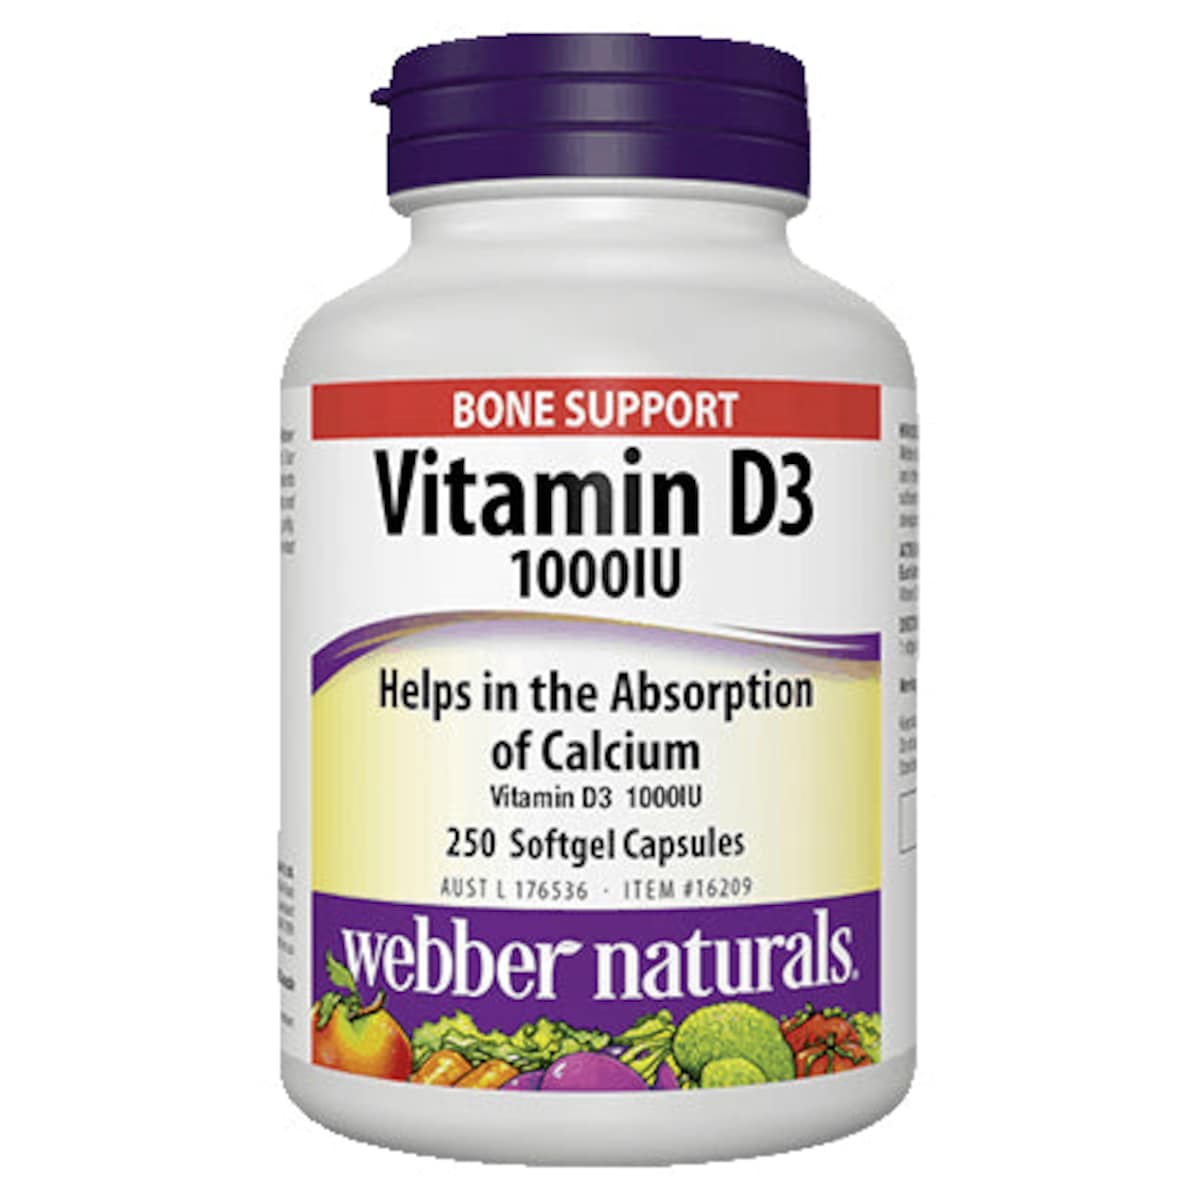 Webber Naturals Vitamin D3 1000iu 250 Soft Gel Capsules